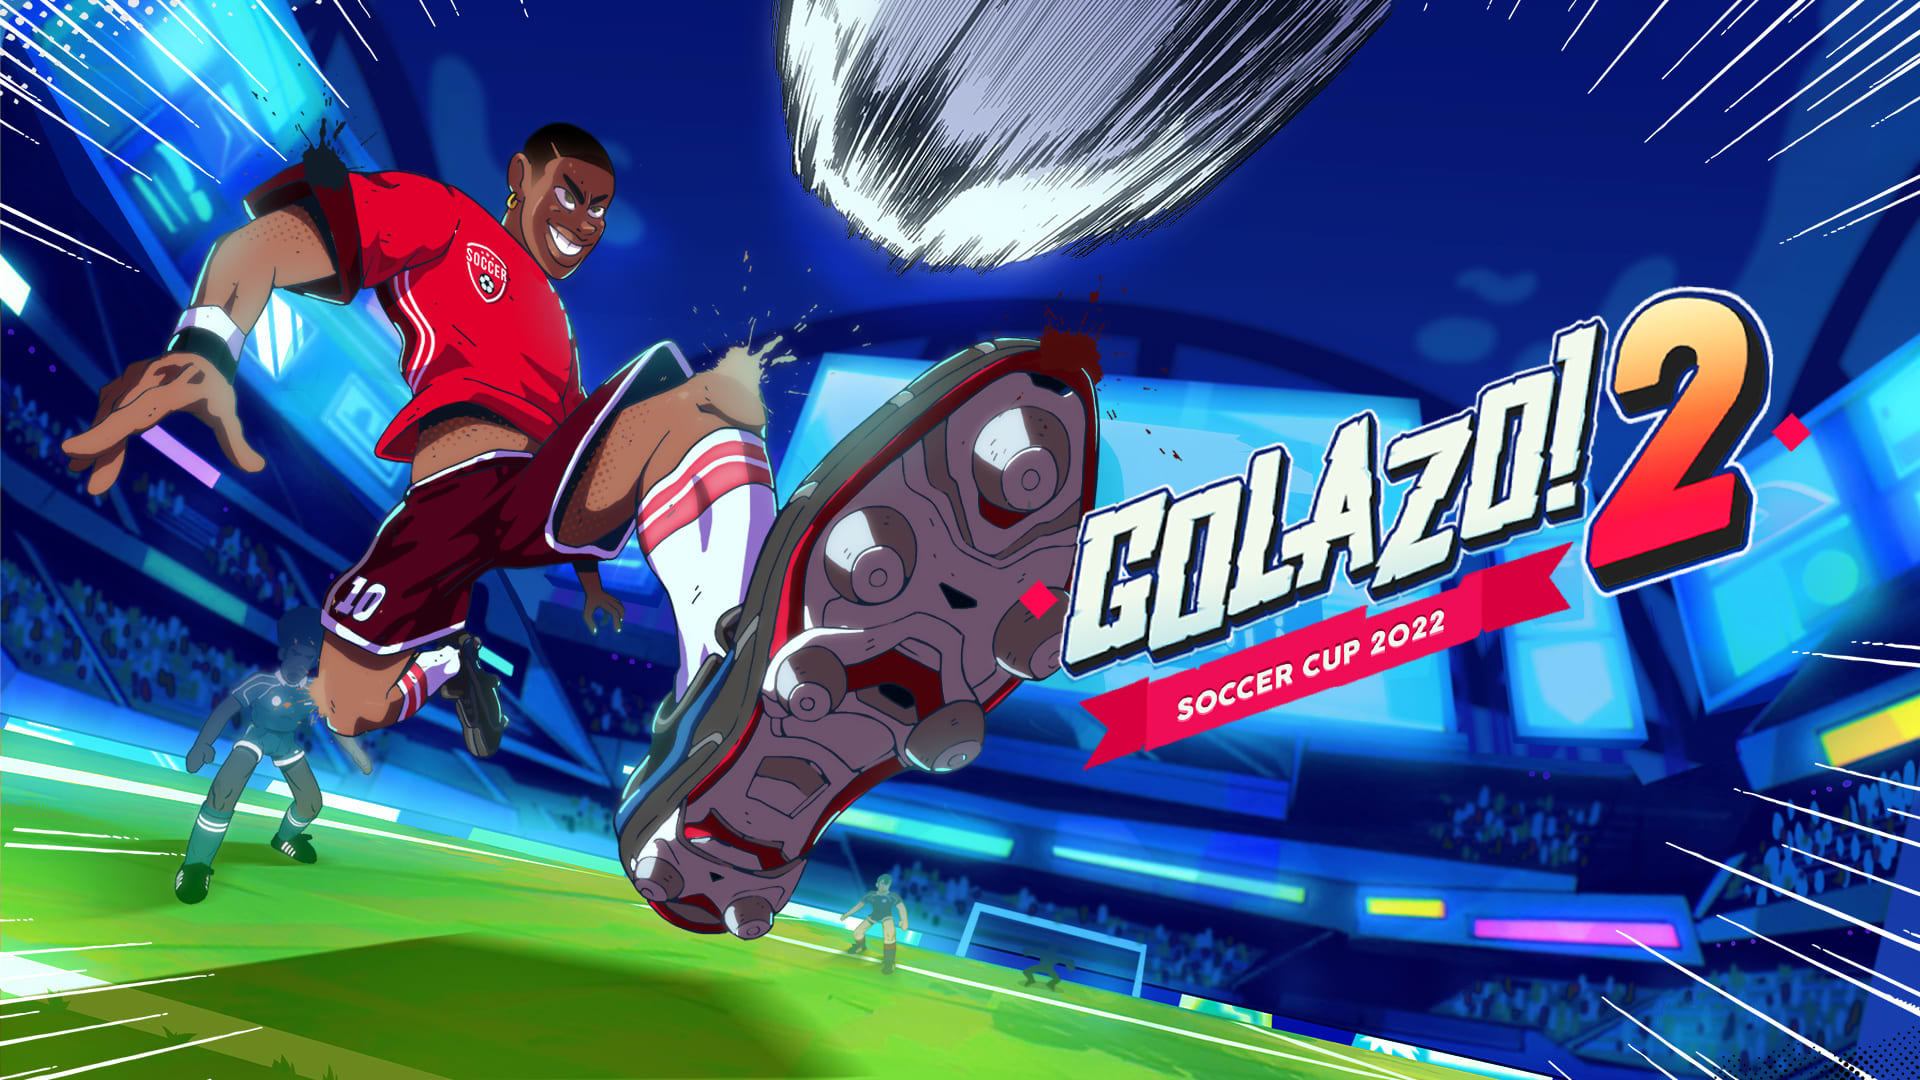 Golazo! 2: Soccer Cup 2022